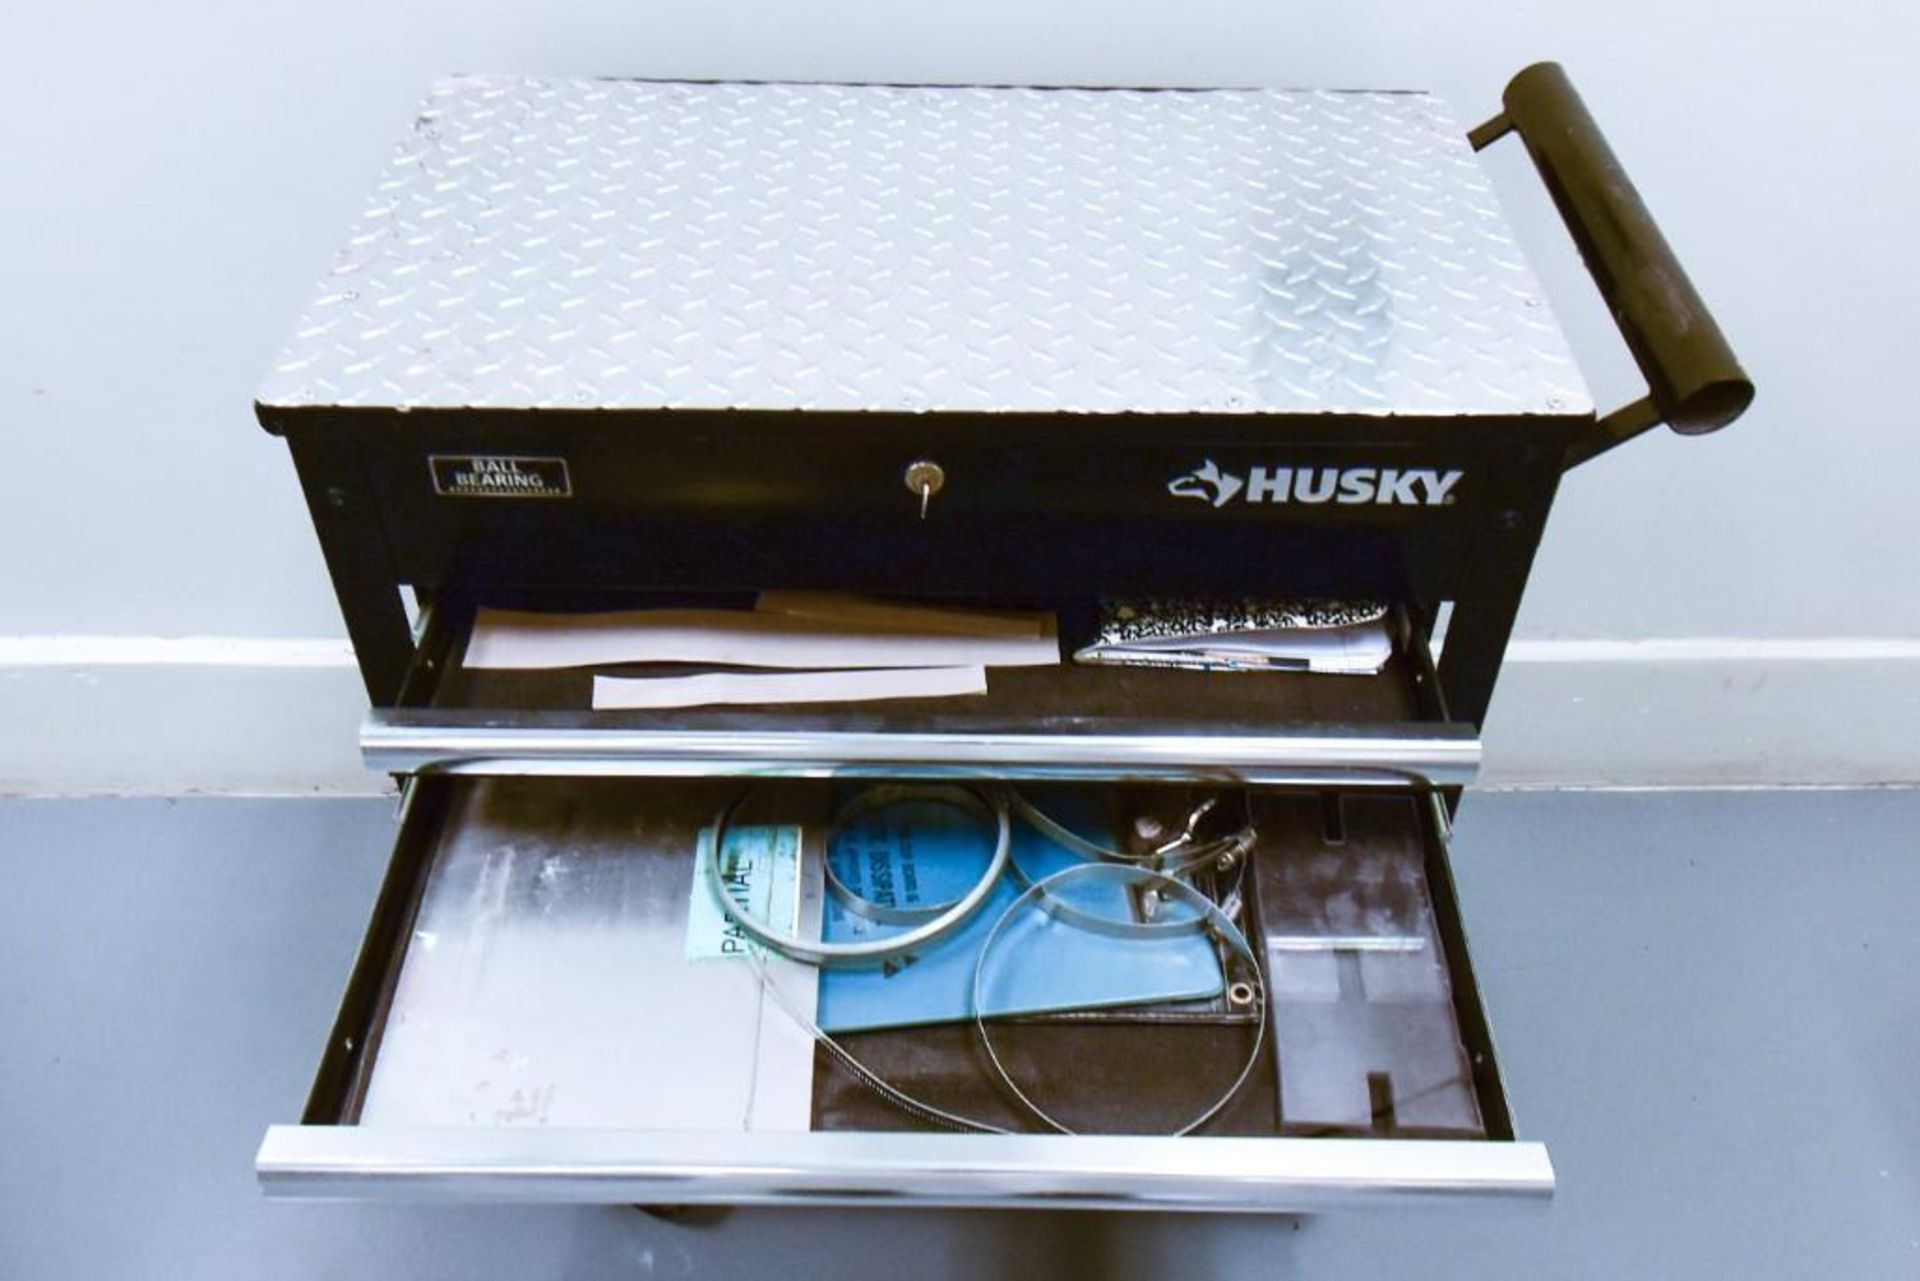 Husky toolbox - Image 2 of 3